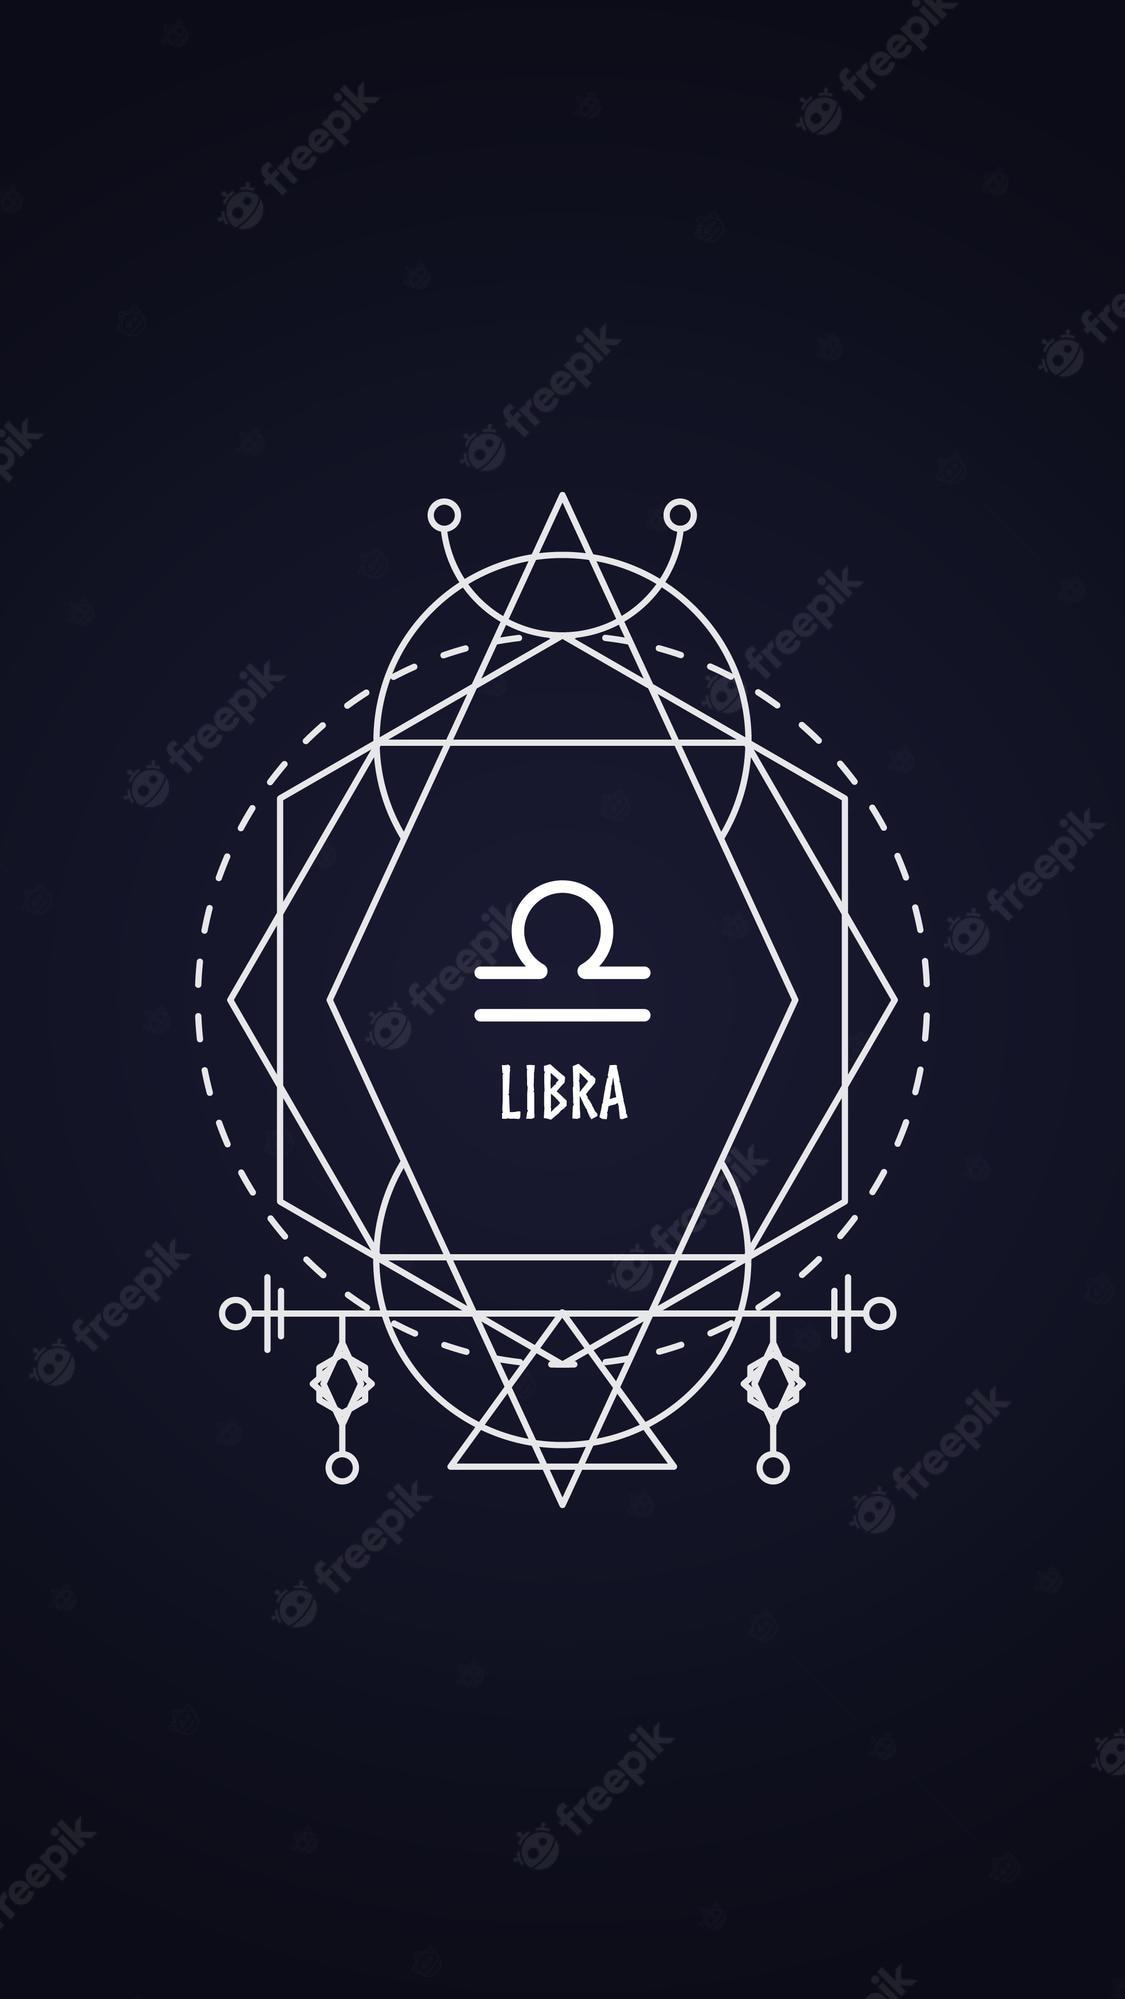 Premium Vector Libra Zodiac Sign Wallpaper For Mobile